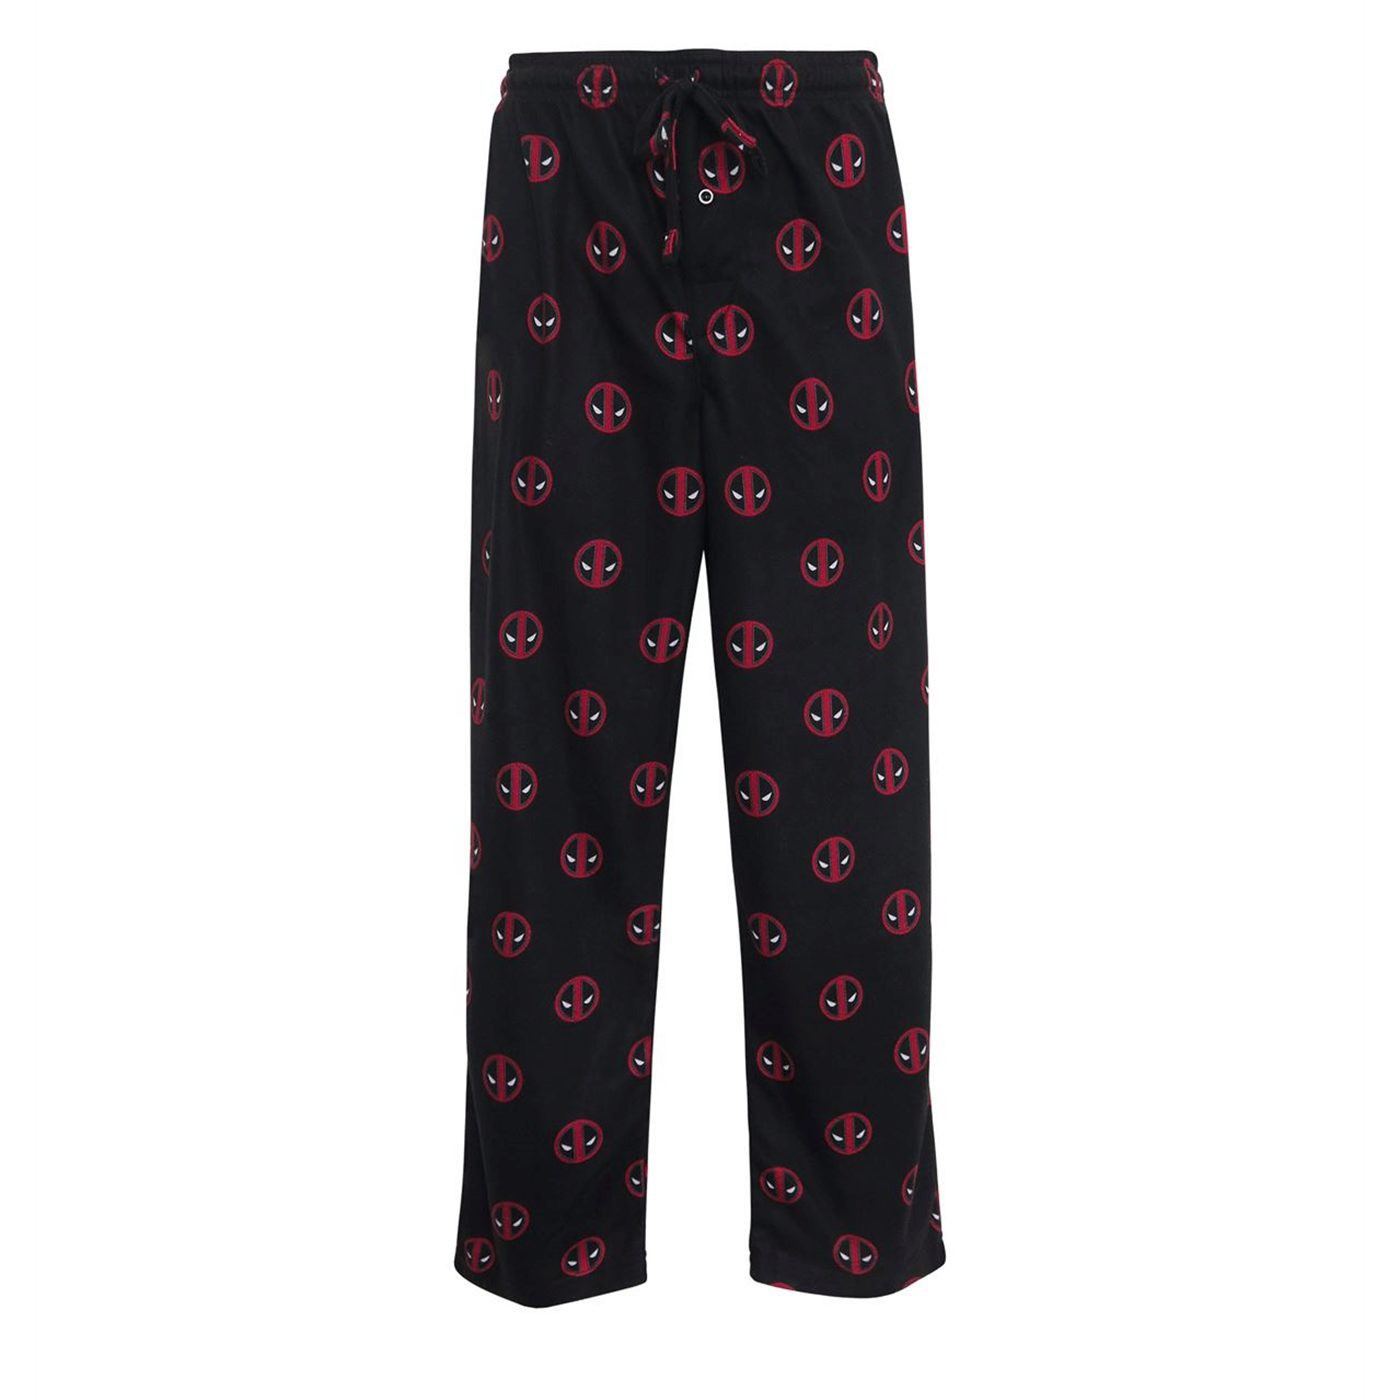 Deadpool All-Over Print Pajama Set